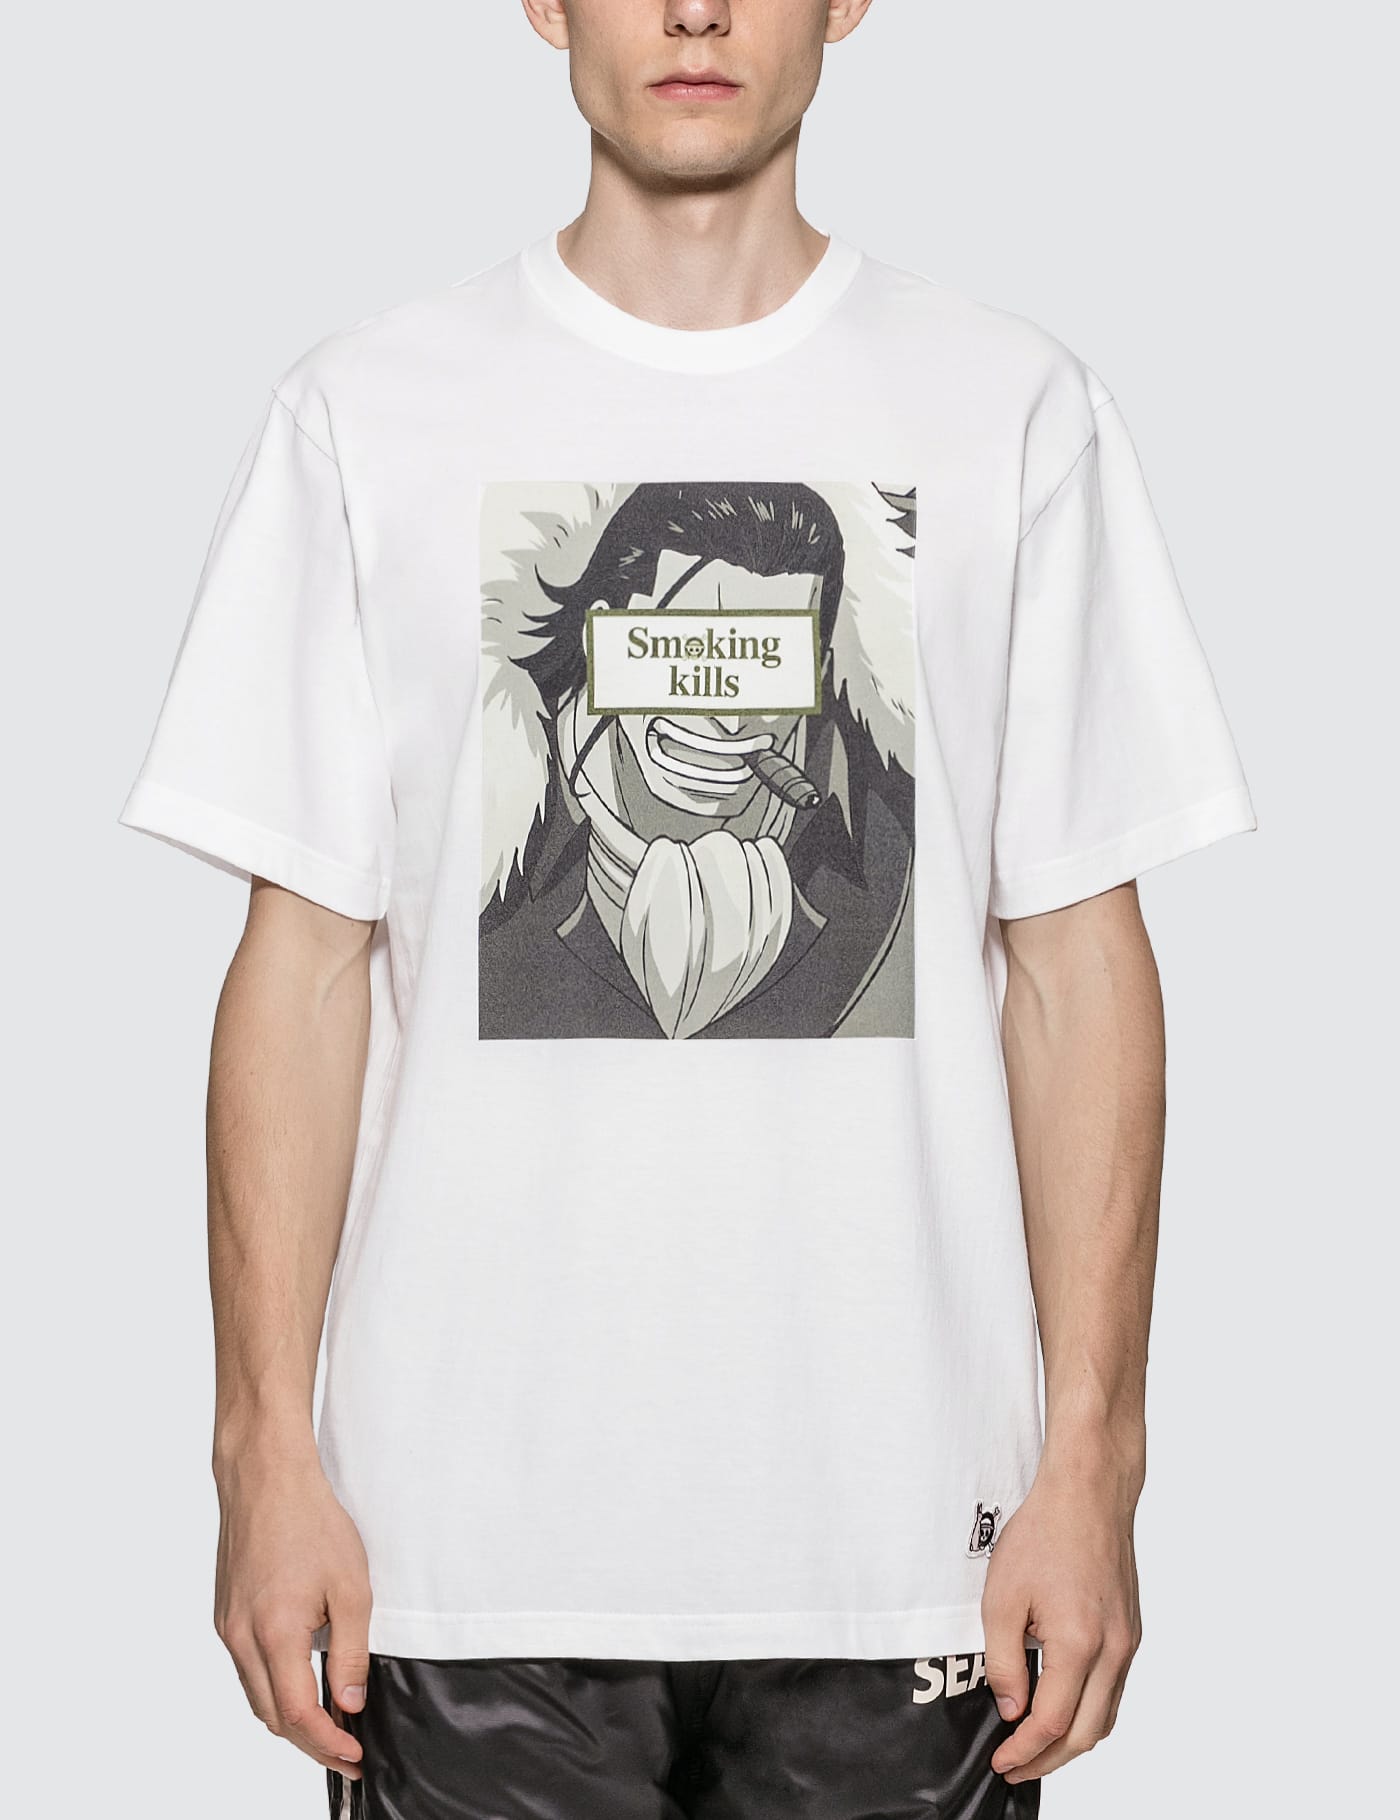 #FR2 X One Piece Crocodile Smokers T-shirt